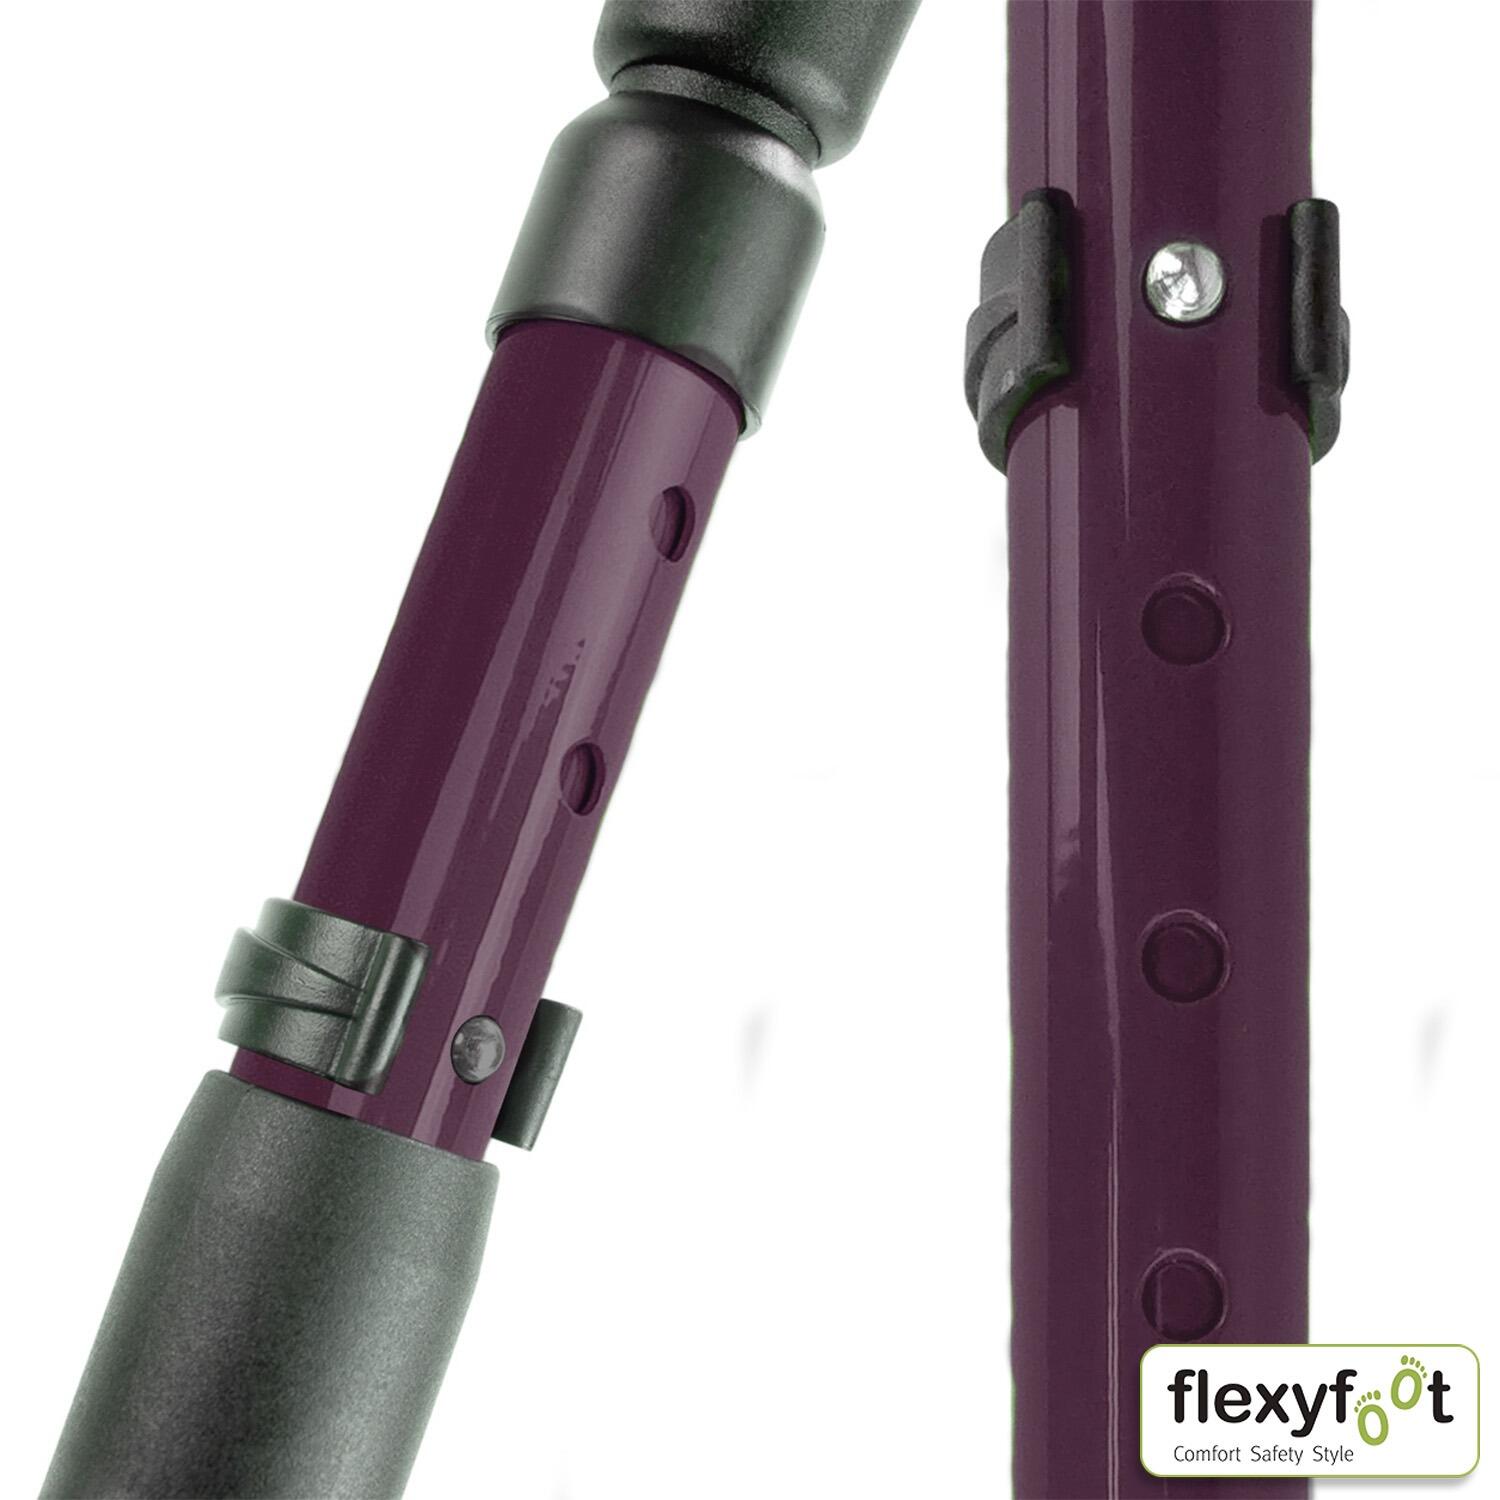 Flexyfoot Soft Grip Shock Absorbing Crutches - Blackberry - Adjustments